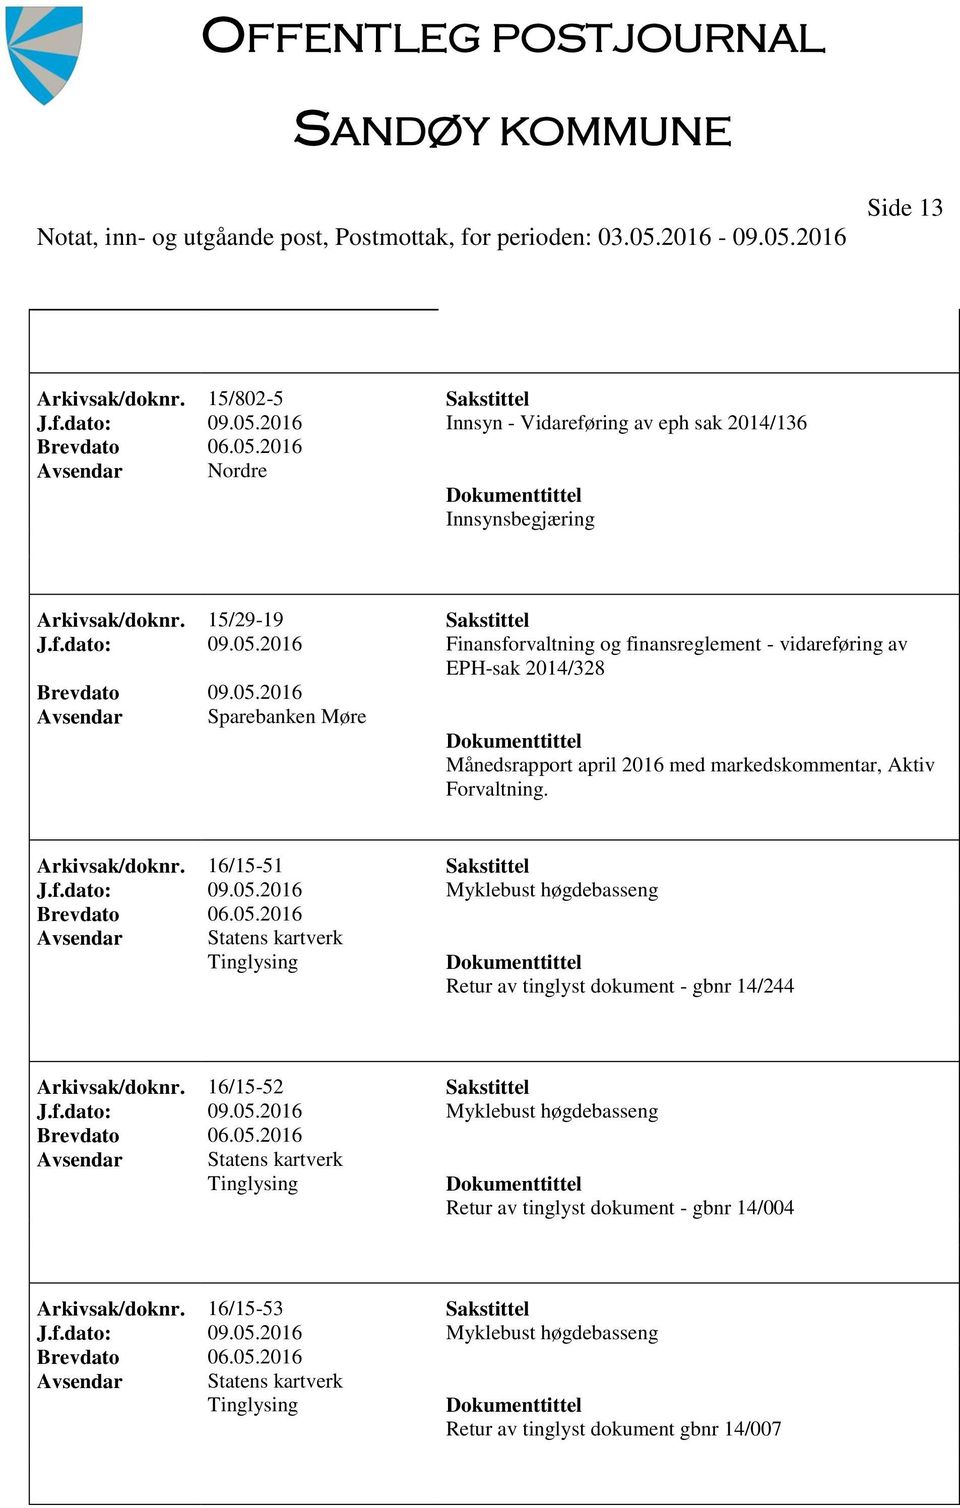 2016 Finansforvaltning og finansreglement - vidareføring av EPH-sak 2014/328 Sparebanken Møre Månedsrapport april 2016 med markedskommentar, Aktiv Forvaltning. Arkivsak/doknr.